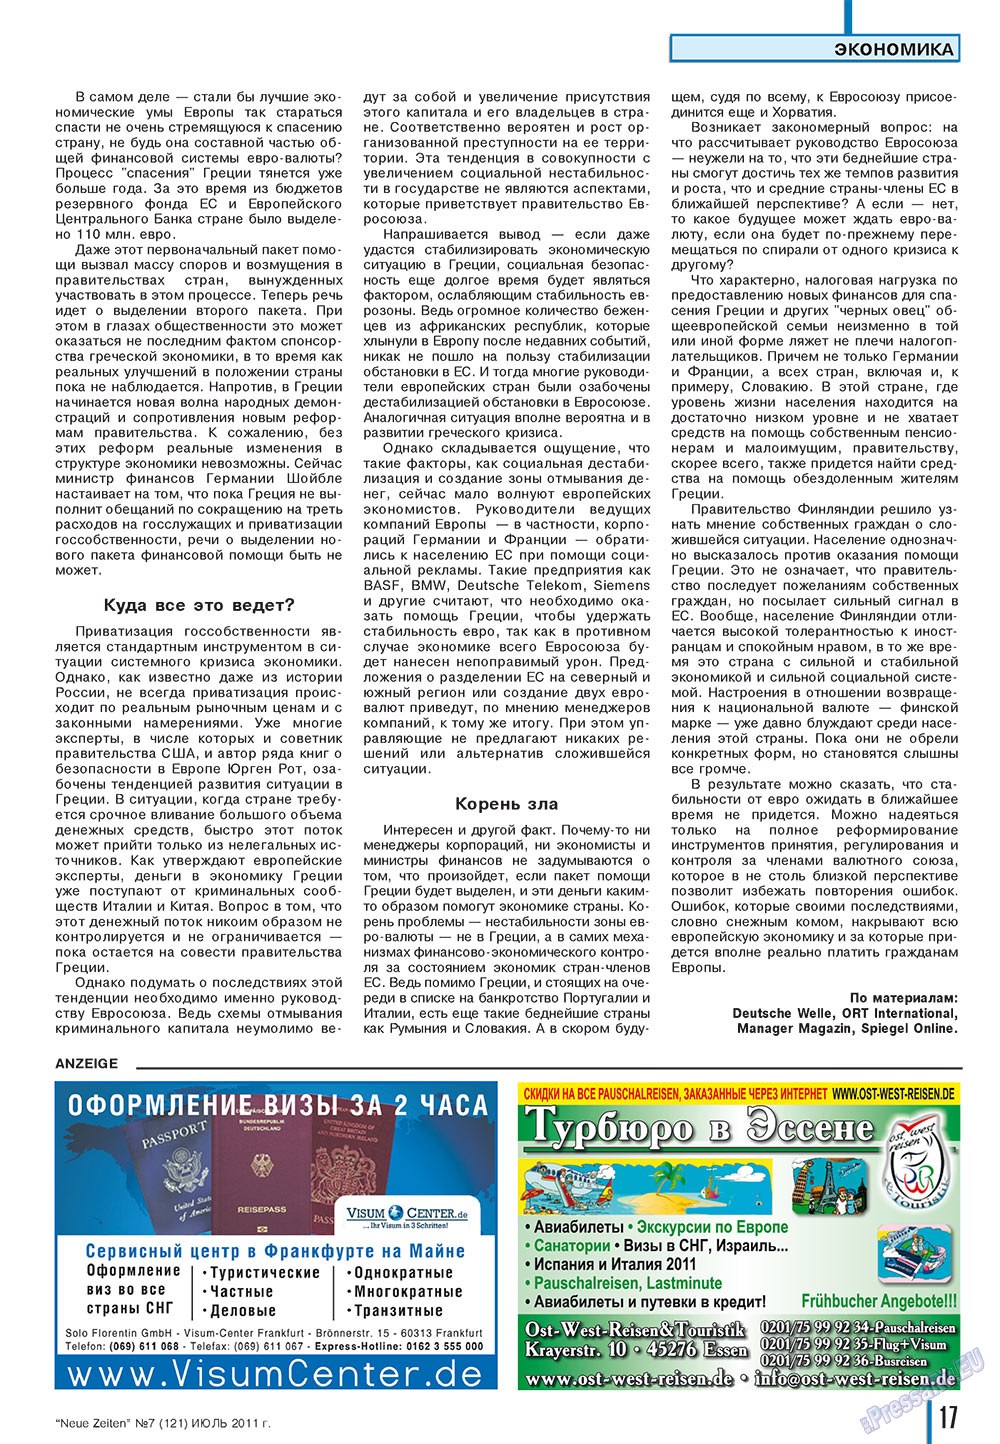 Neue Zeiten (журнал). 2011 год, номер 7, стр. 17